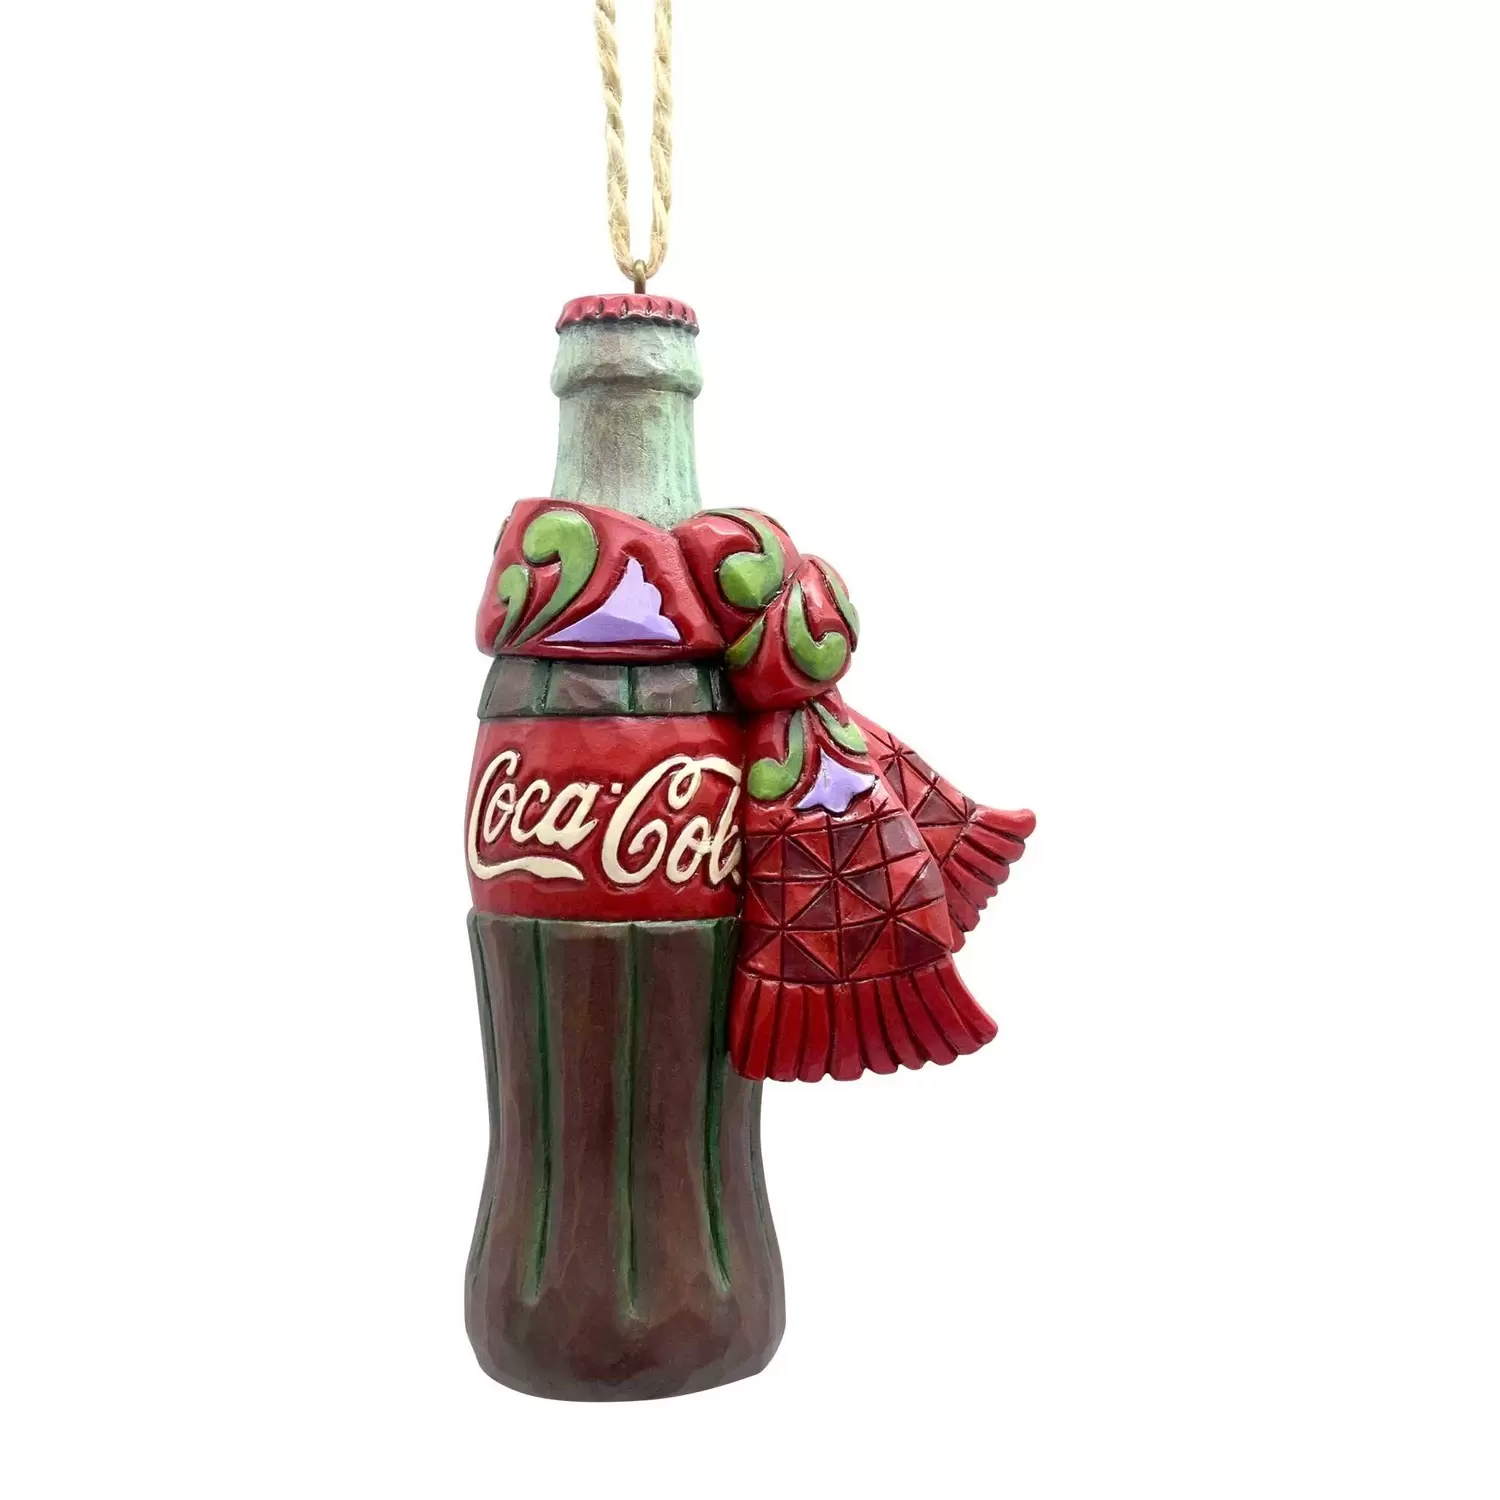 Coca-Cola Jim Shore - Coca-Cola Bottle with Scarf Hanging Ornament